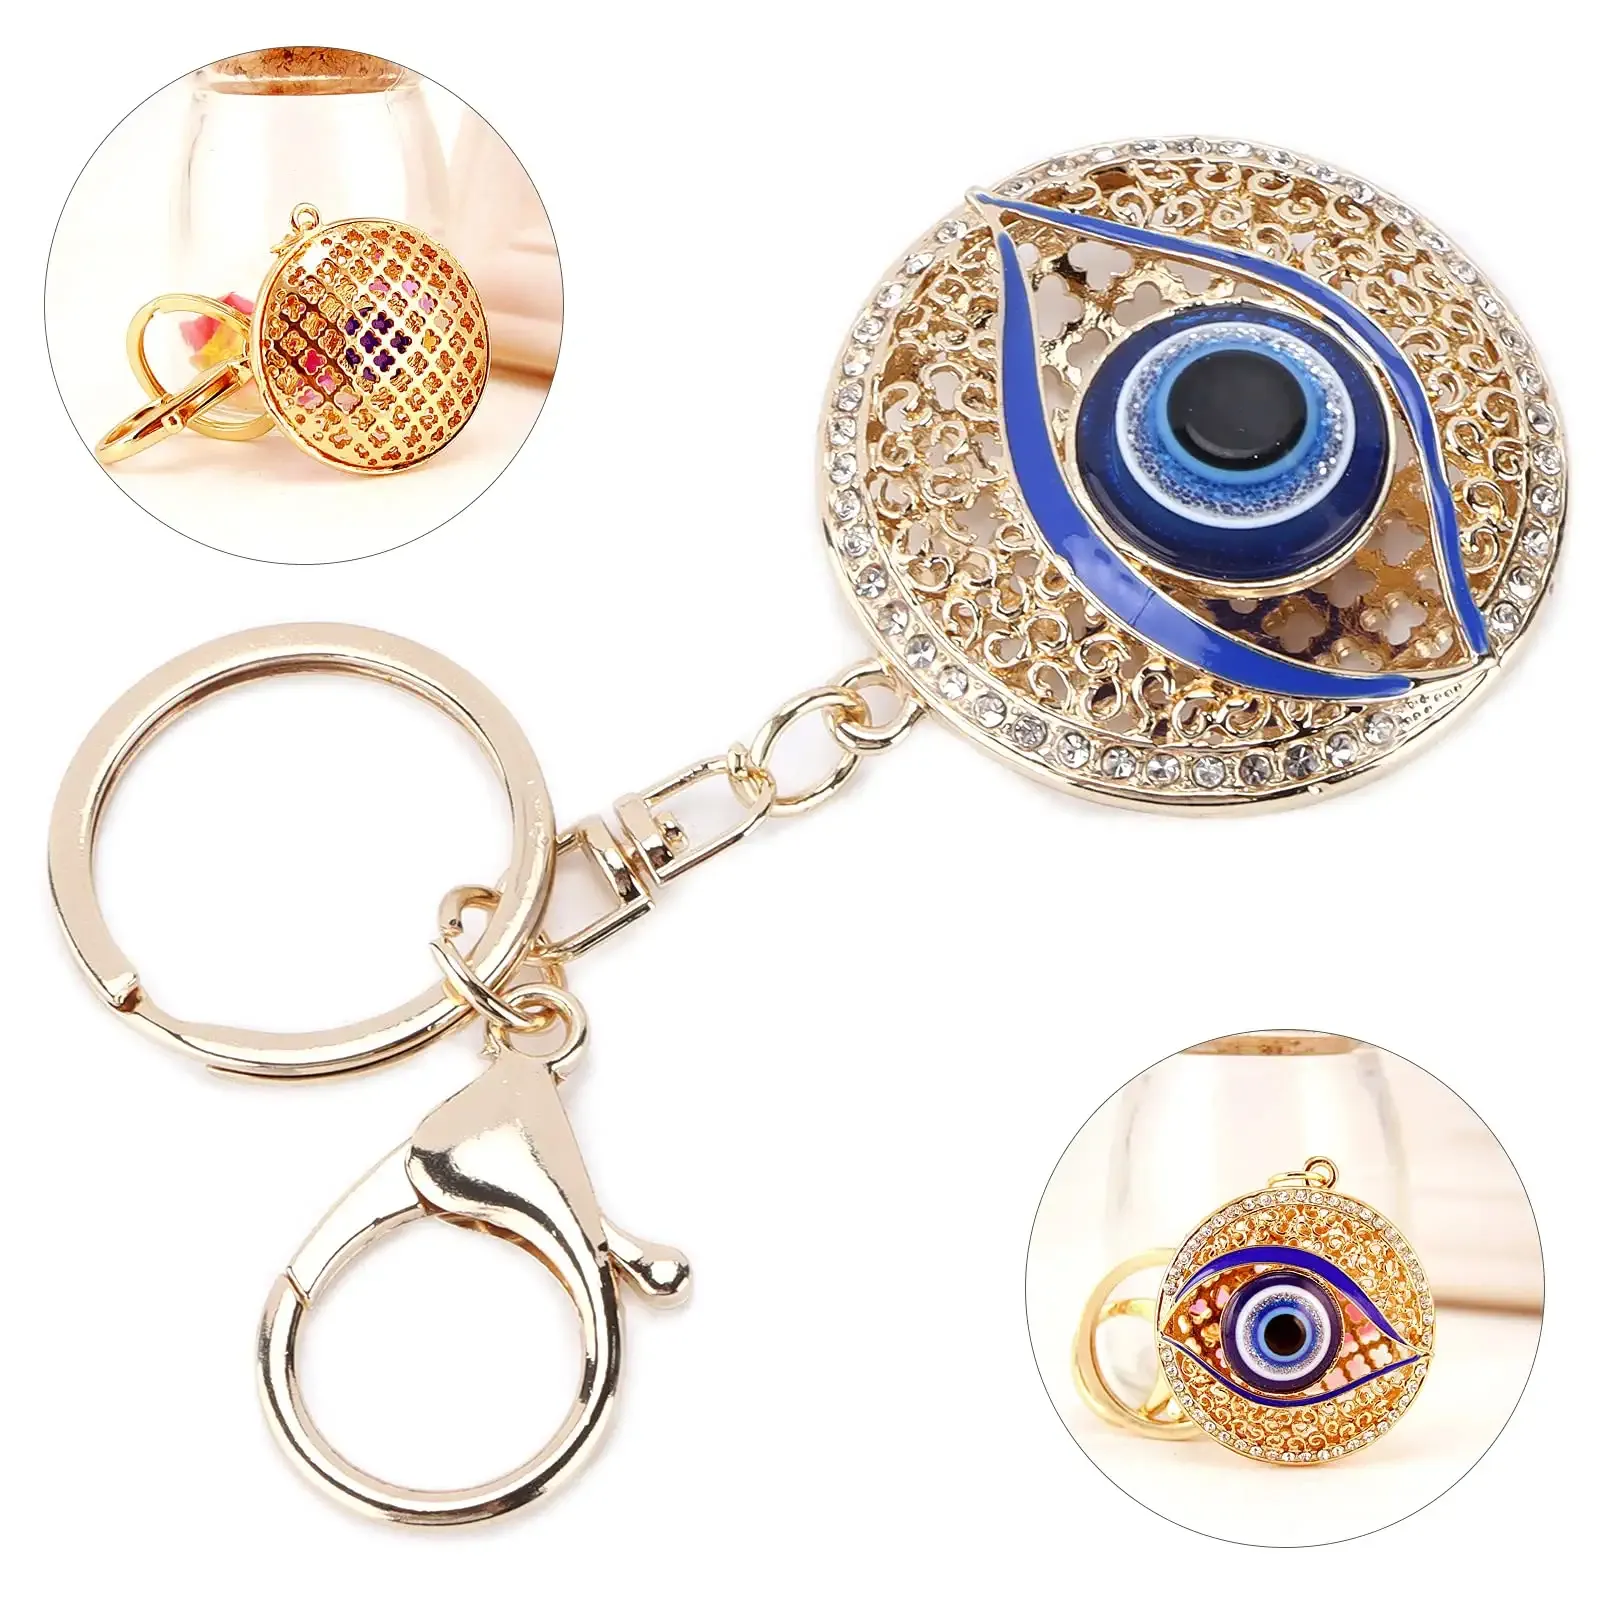 3ml blue evil eye keychain pendant car home handbag decor pendant home decoration gifts lucky amulet